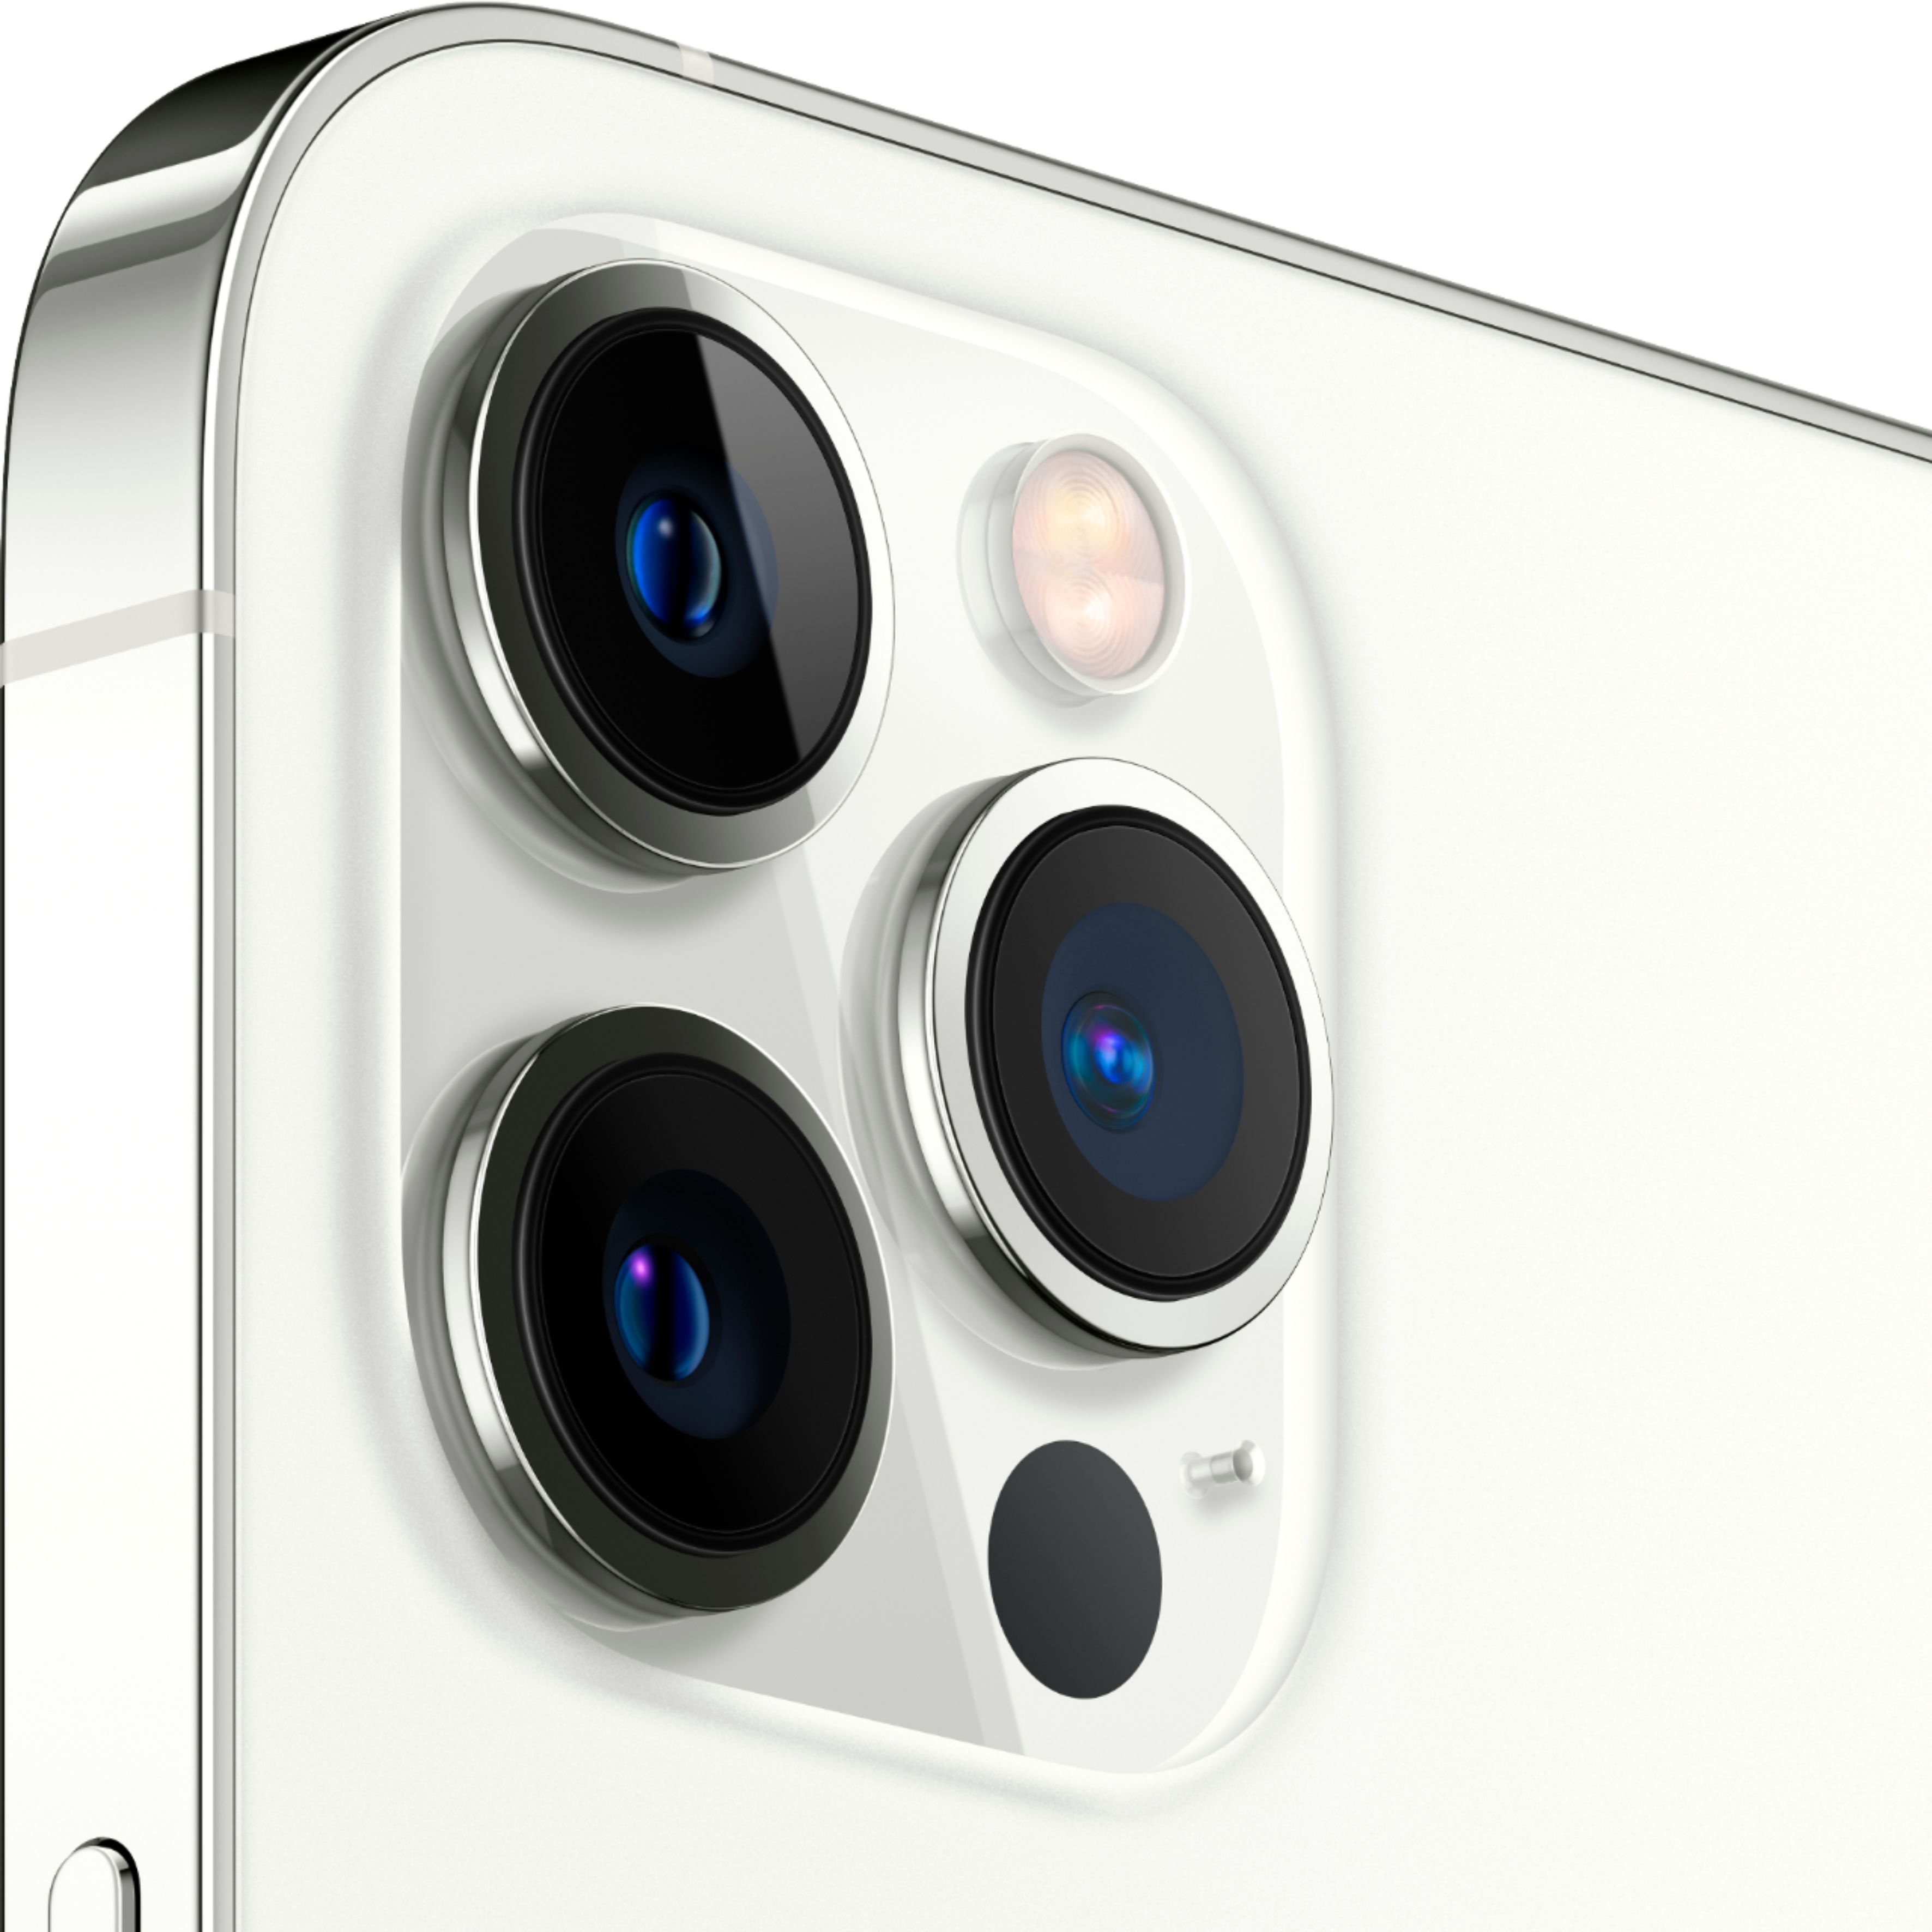 Apple iPhone 12 Pro Max 5G 512GB Silver (Verizon) MGCQ3LL/A Best Buy